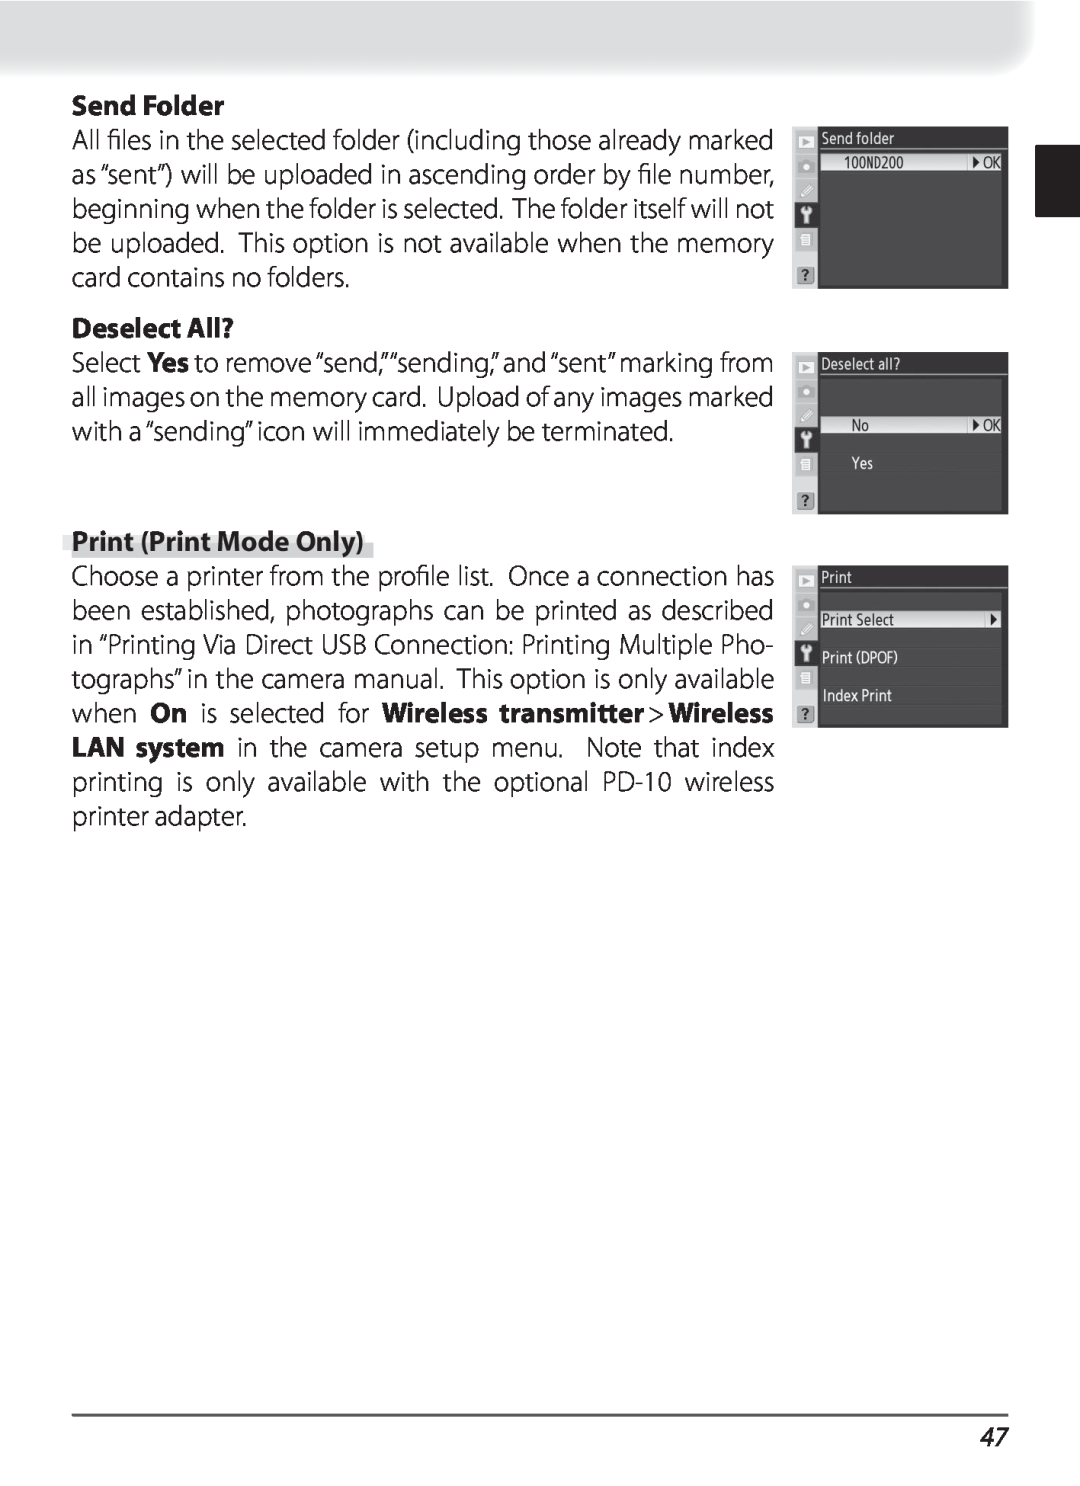 Nikon WT-3 user manual Send Folder, Deselect All?, Print Print Mode Only 